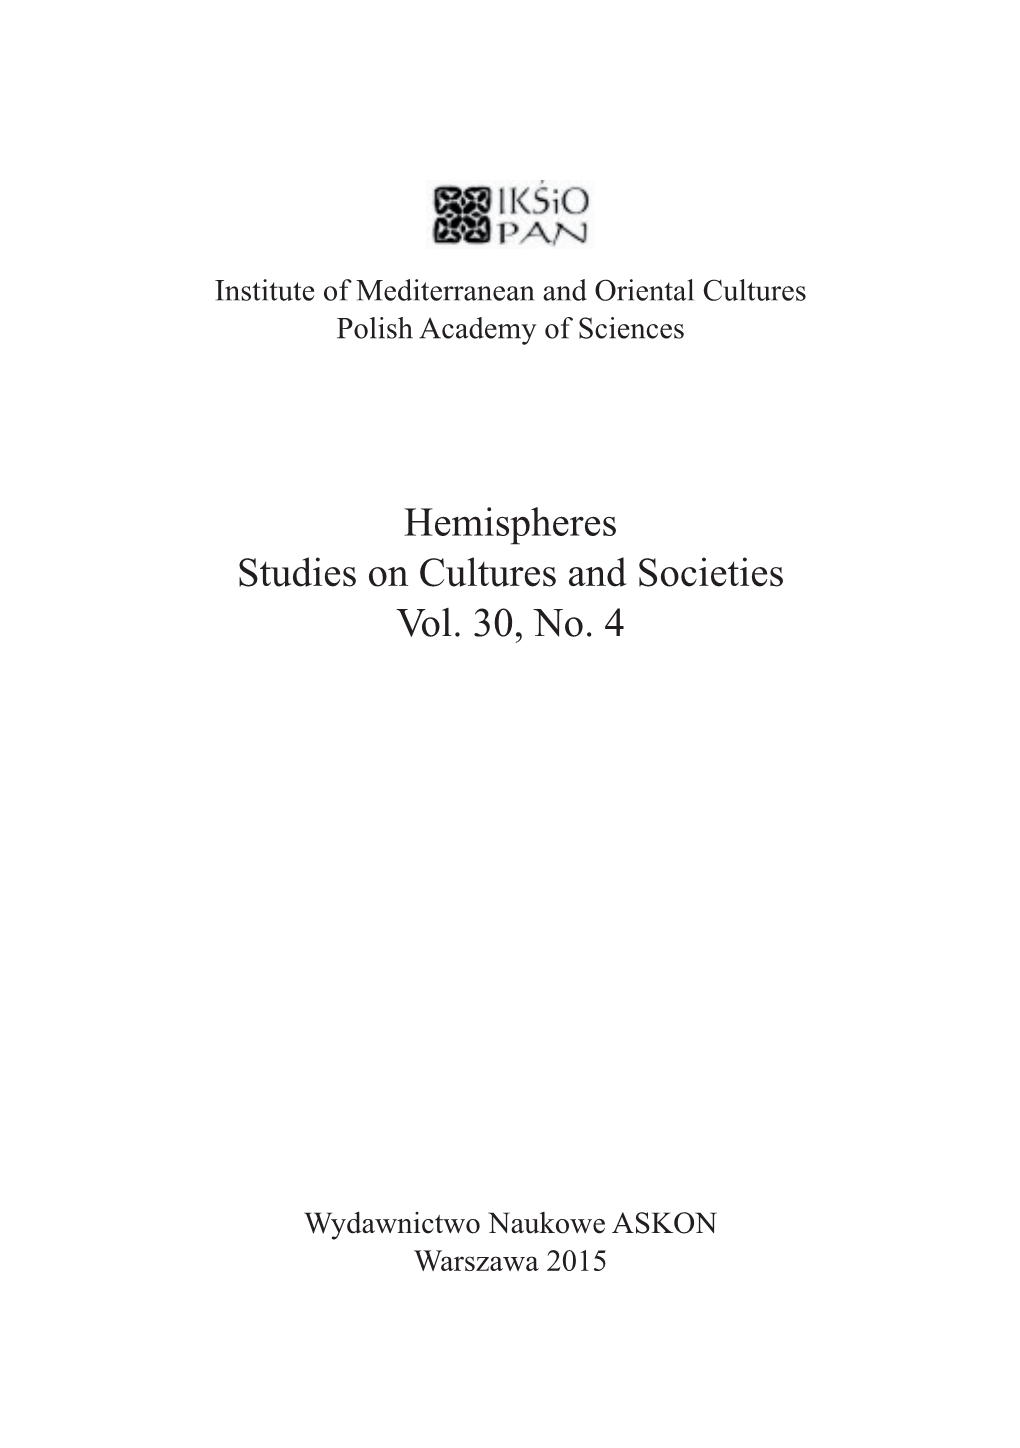 Hemispheres Studies on Cultures and Societies Vol. 30, No. 4